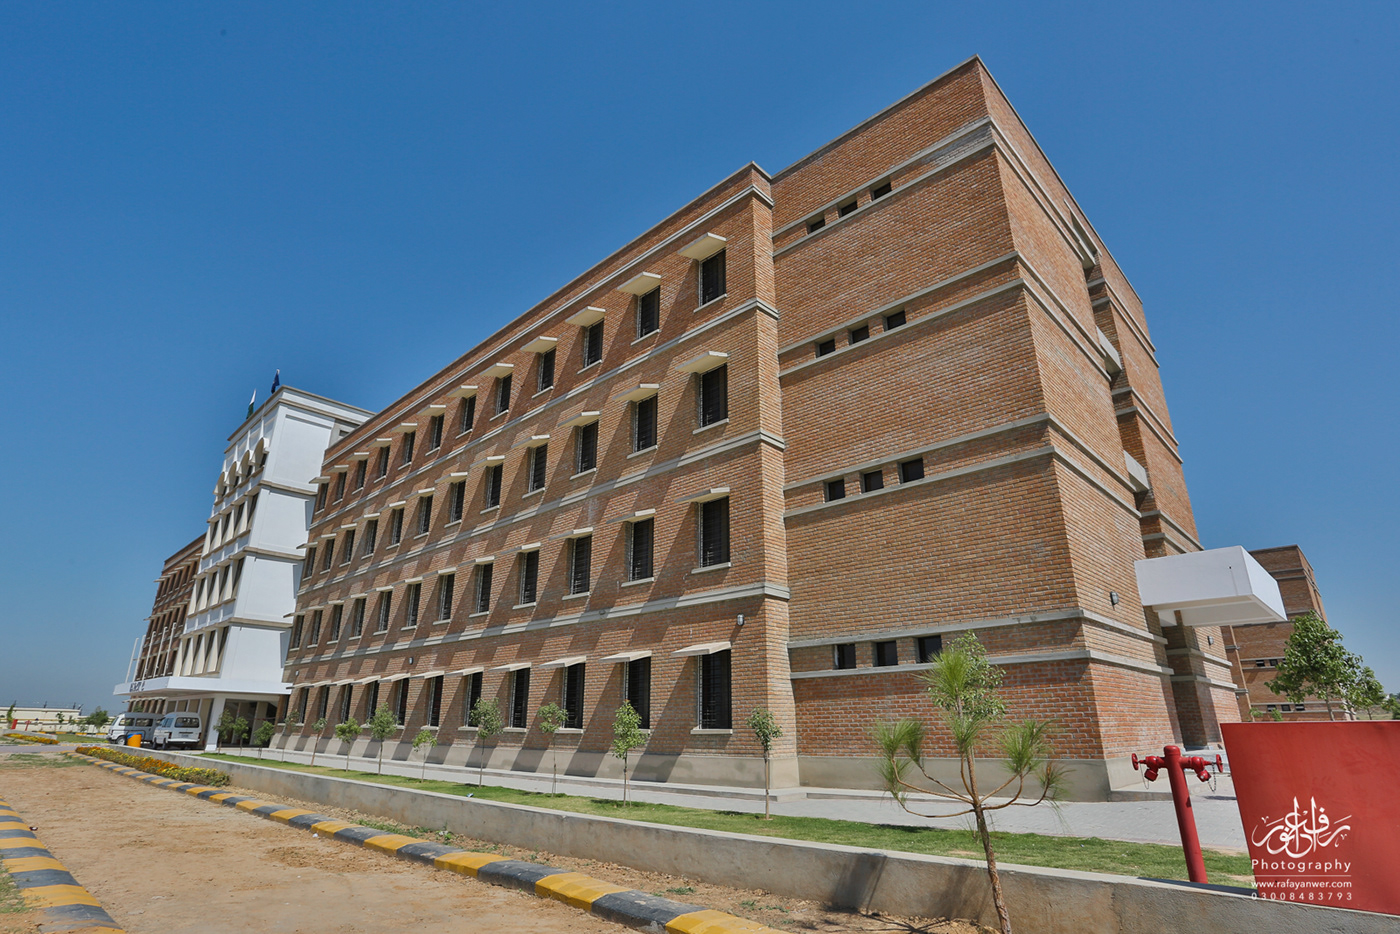 #architecture #Pakistan Architecture #college #rafayanwer #QEL #college architectue architectural photography brick building